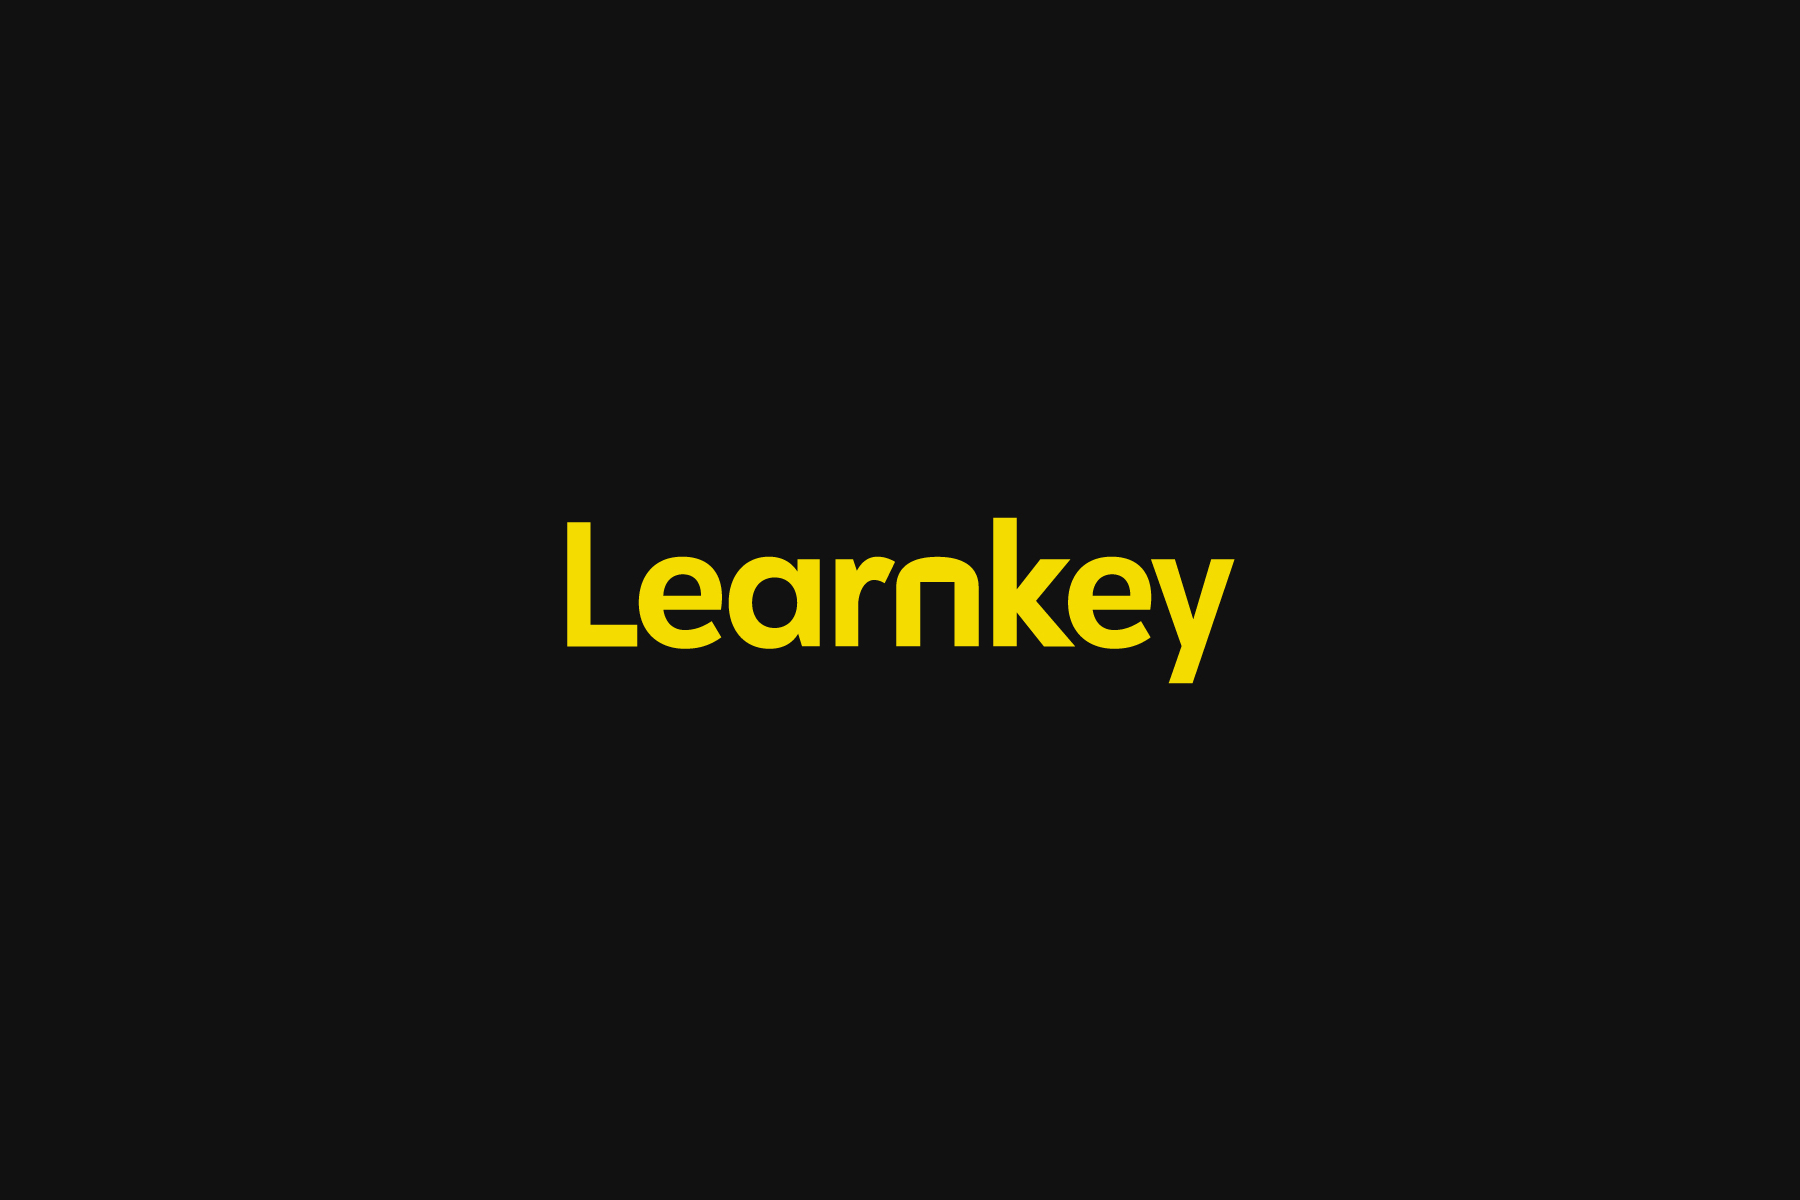 Learnkey logo